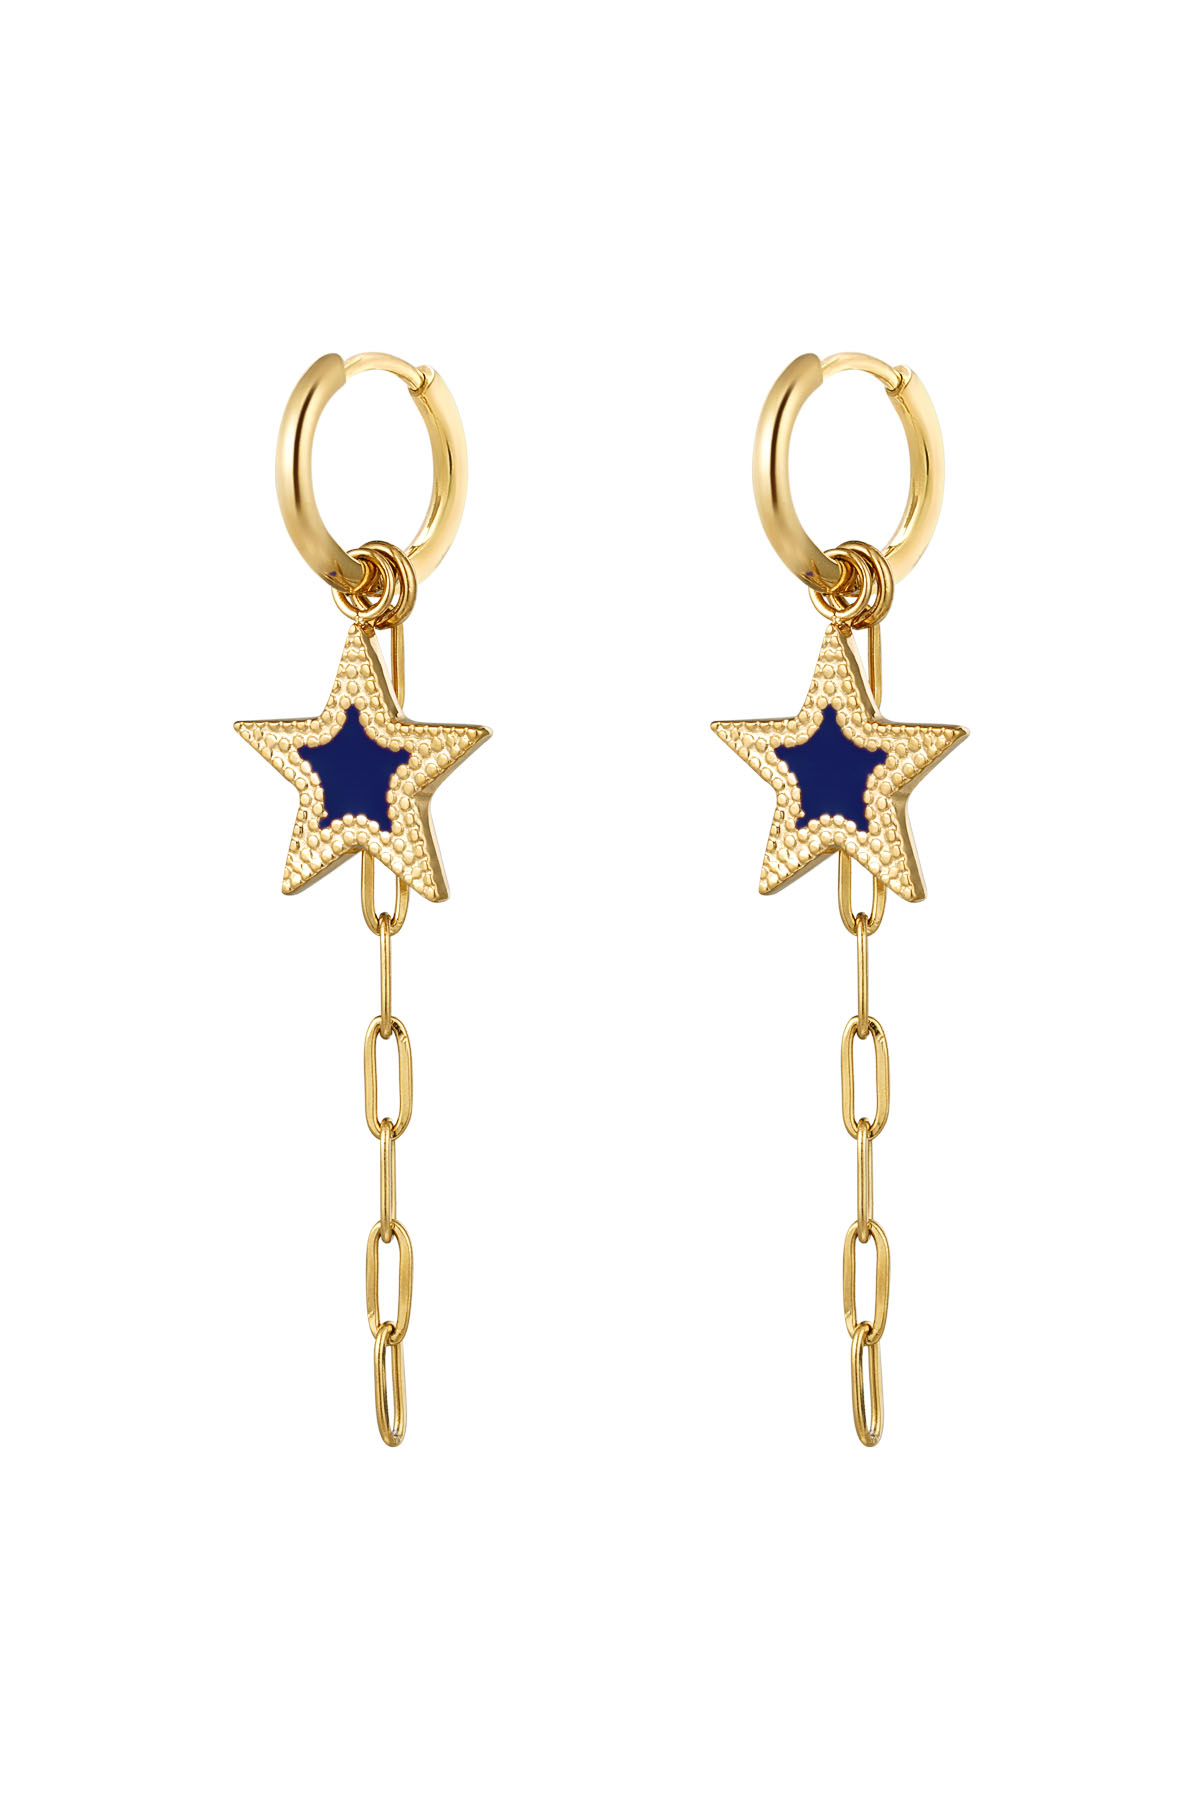 oorbellen met ster en ketting blauw - goud h5 